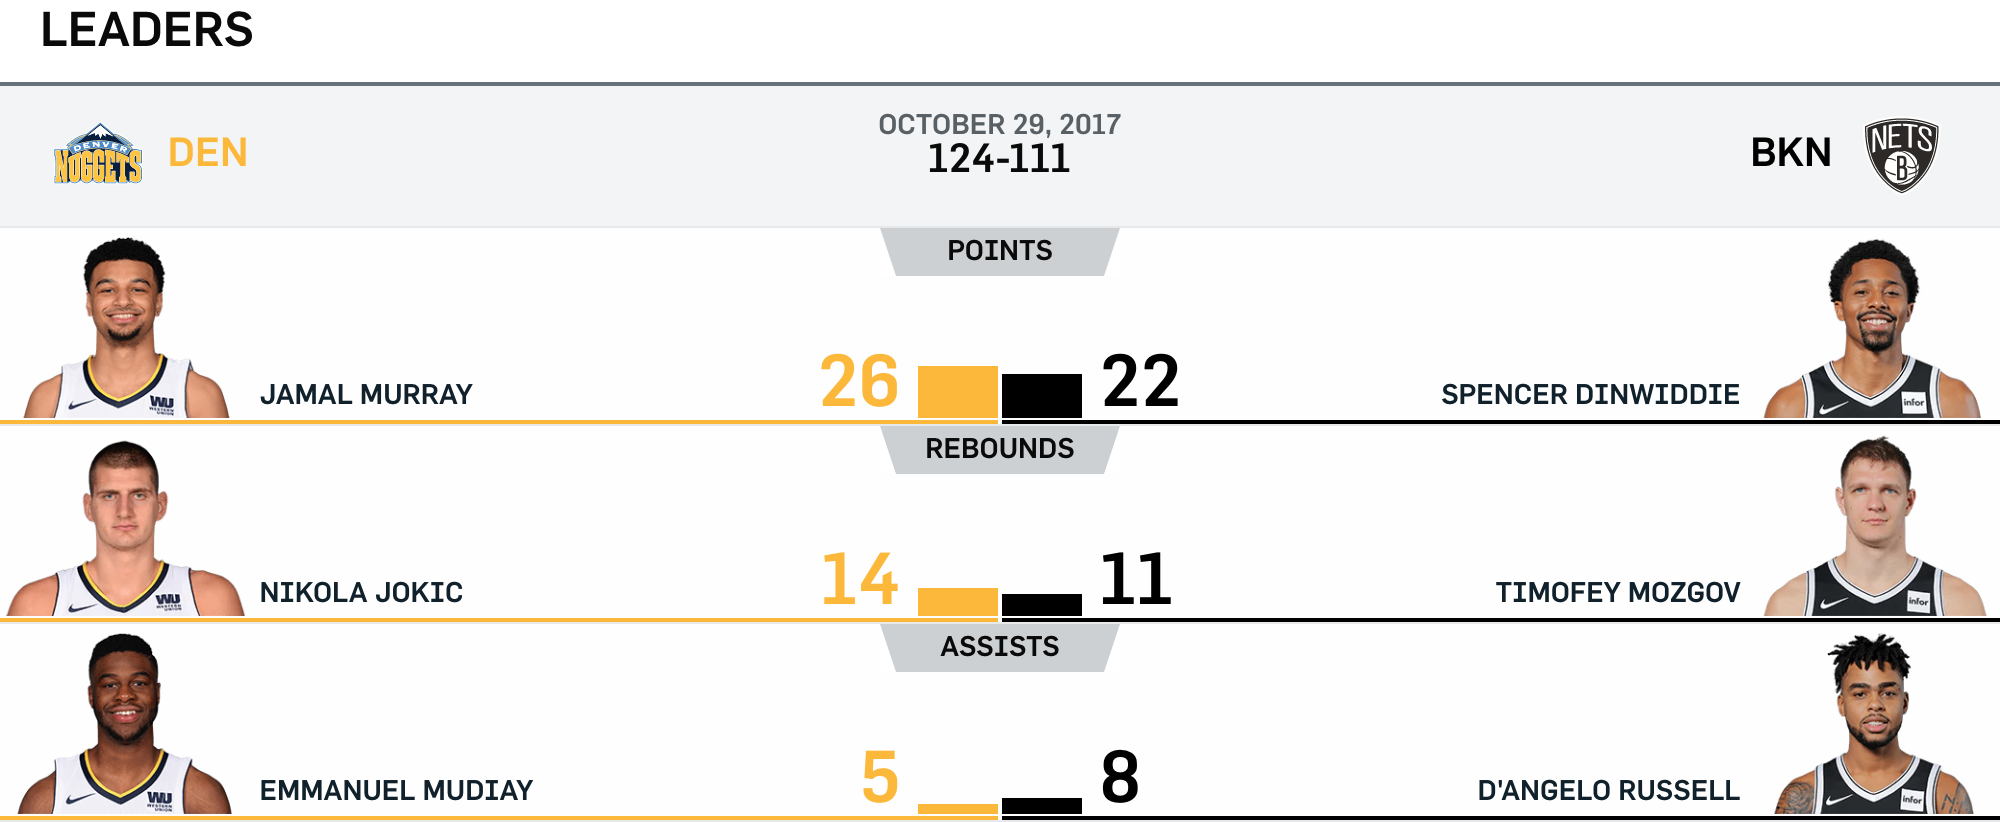 Nets vs Nuggets 10-29-17 Leaders